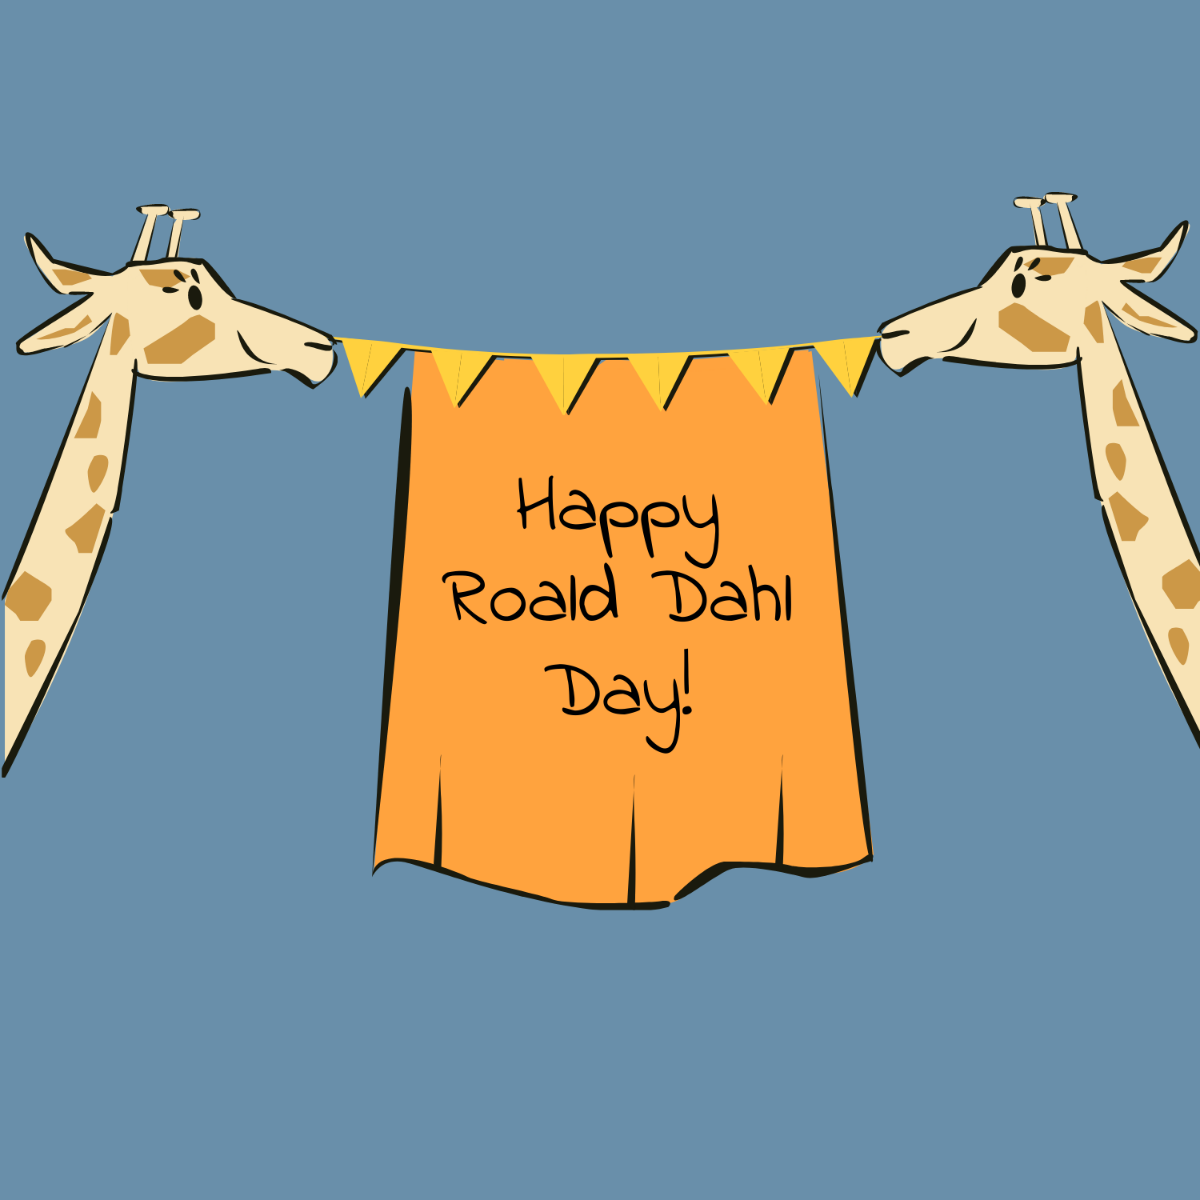 Free Roald Dahl Day Cartoon Vector Template